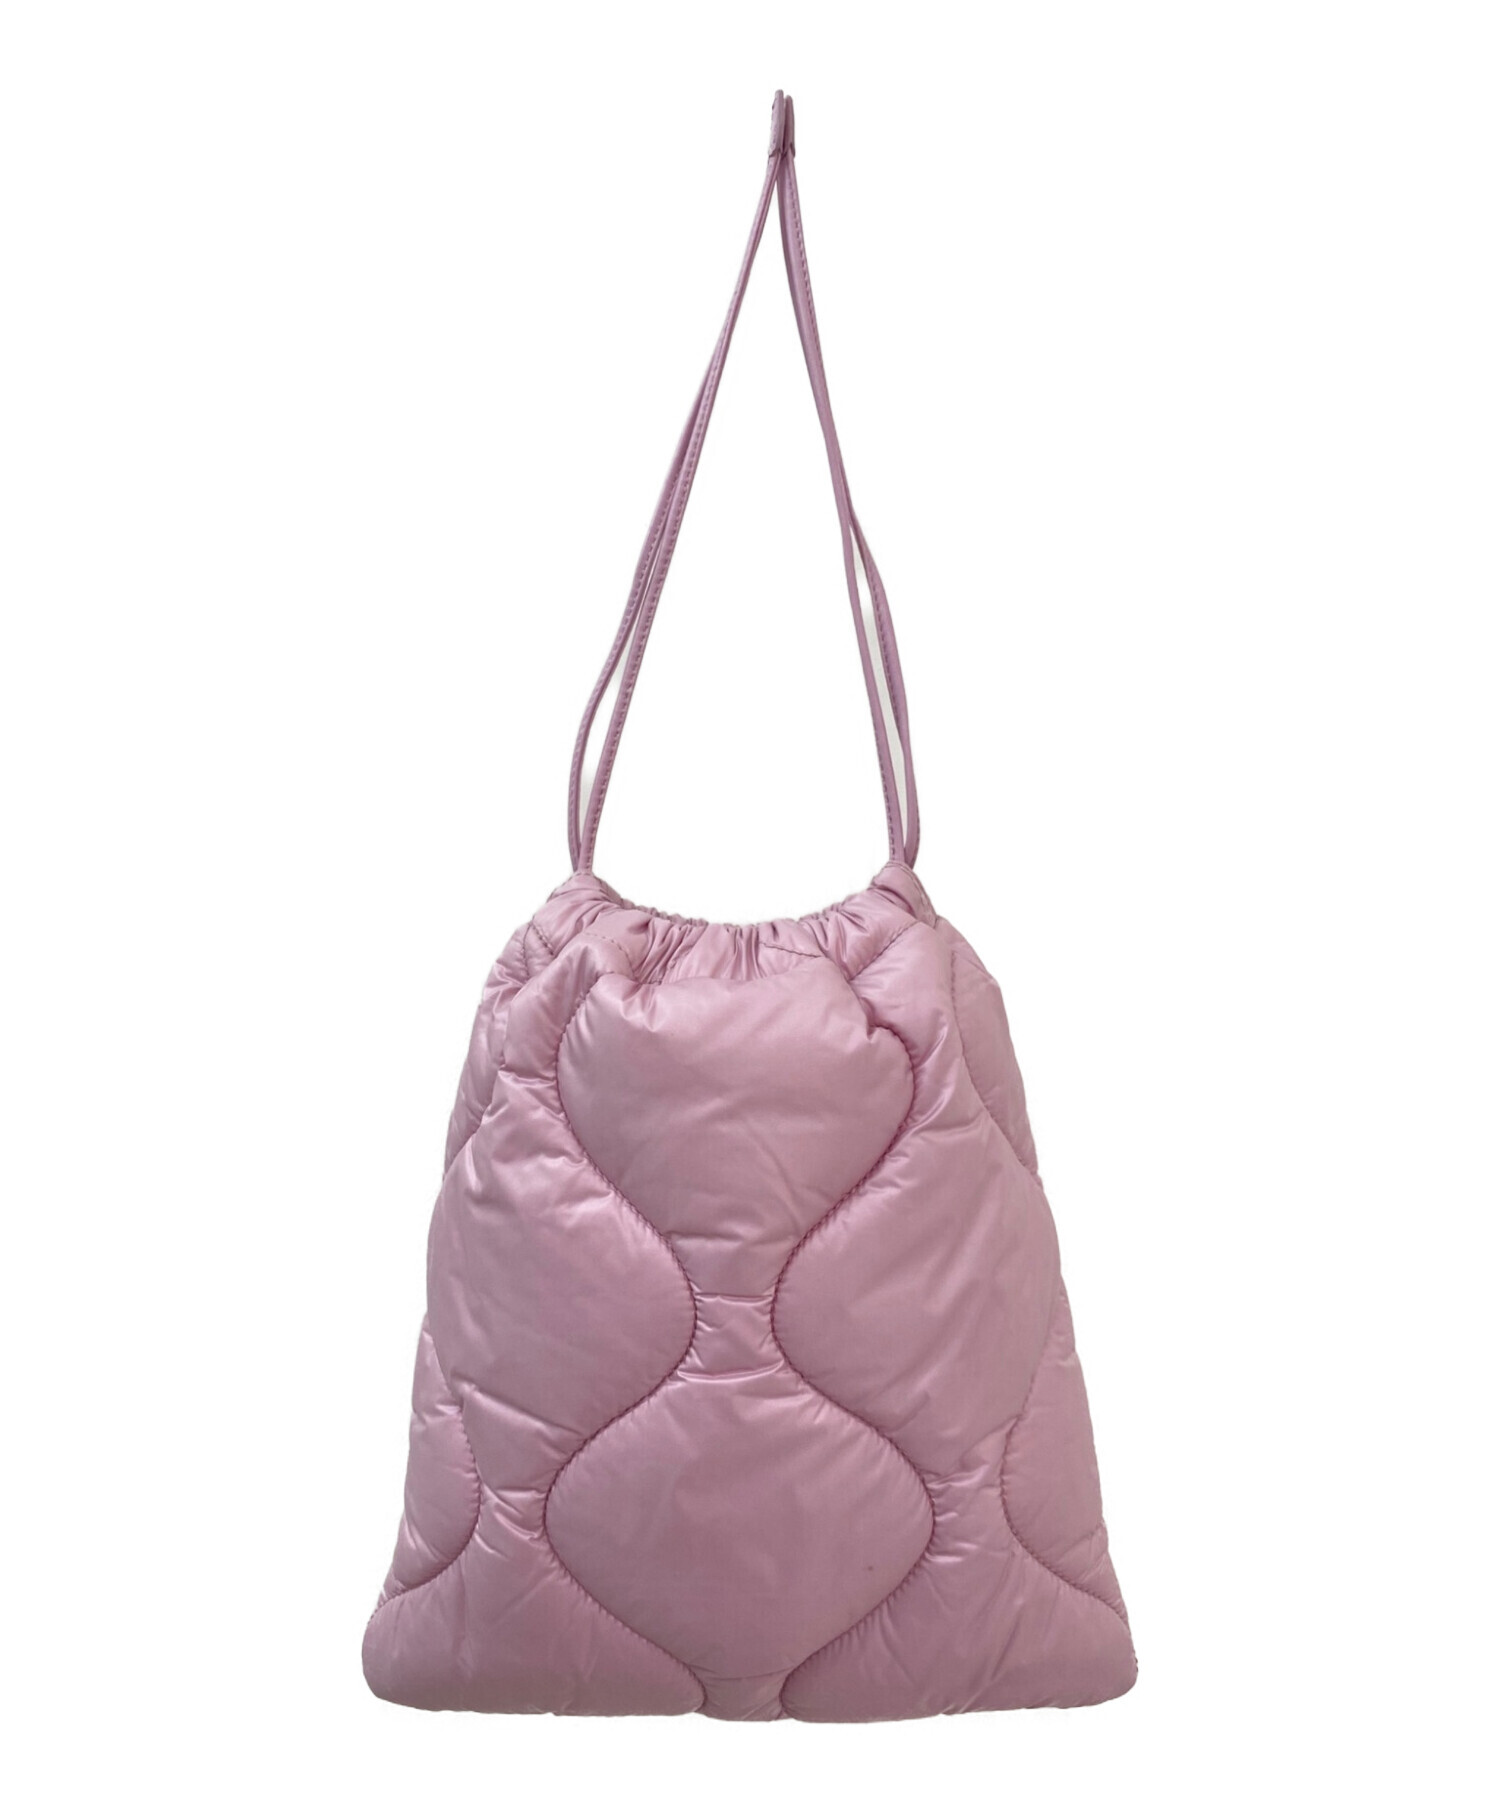 MIU MIU (ミュウミュウ) キルティング巾着バッグ ピンク